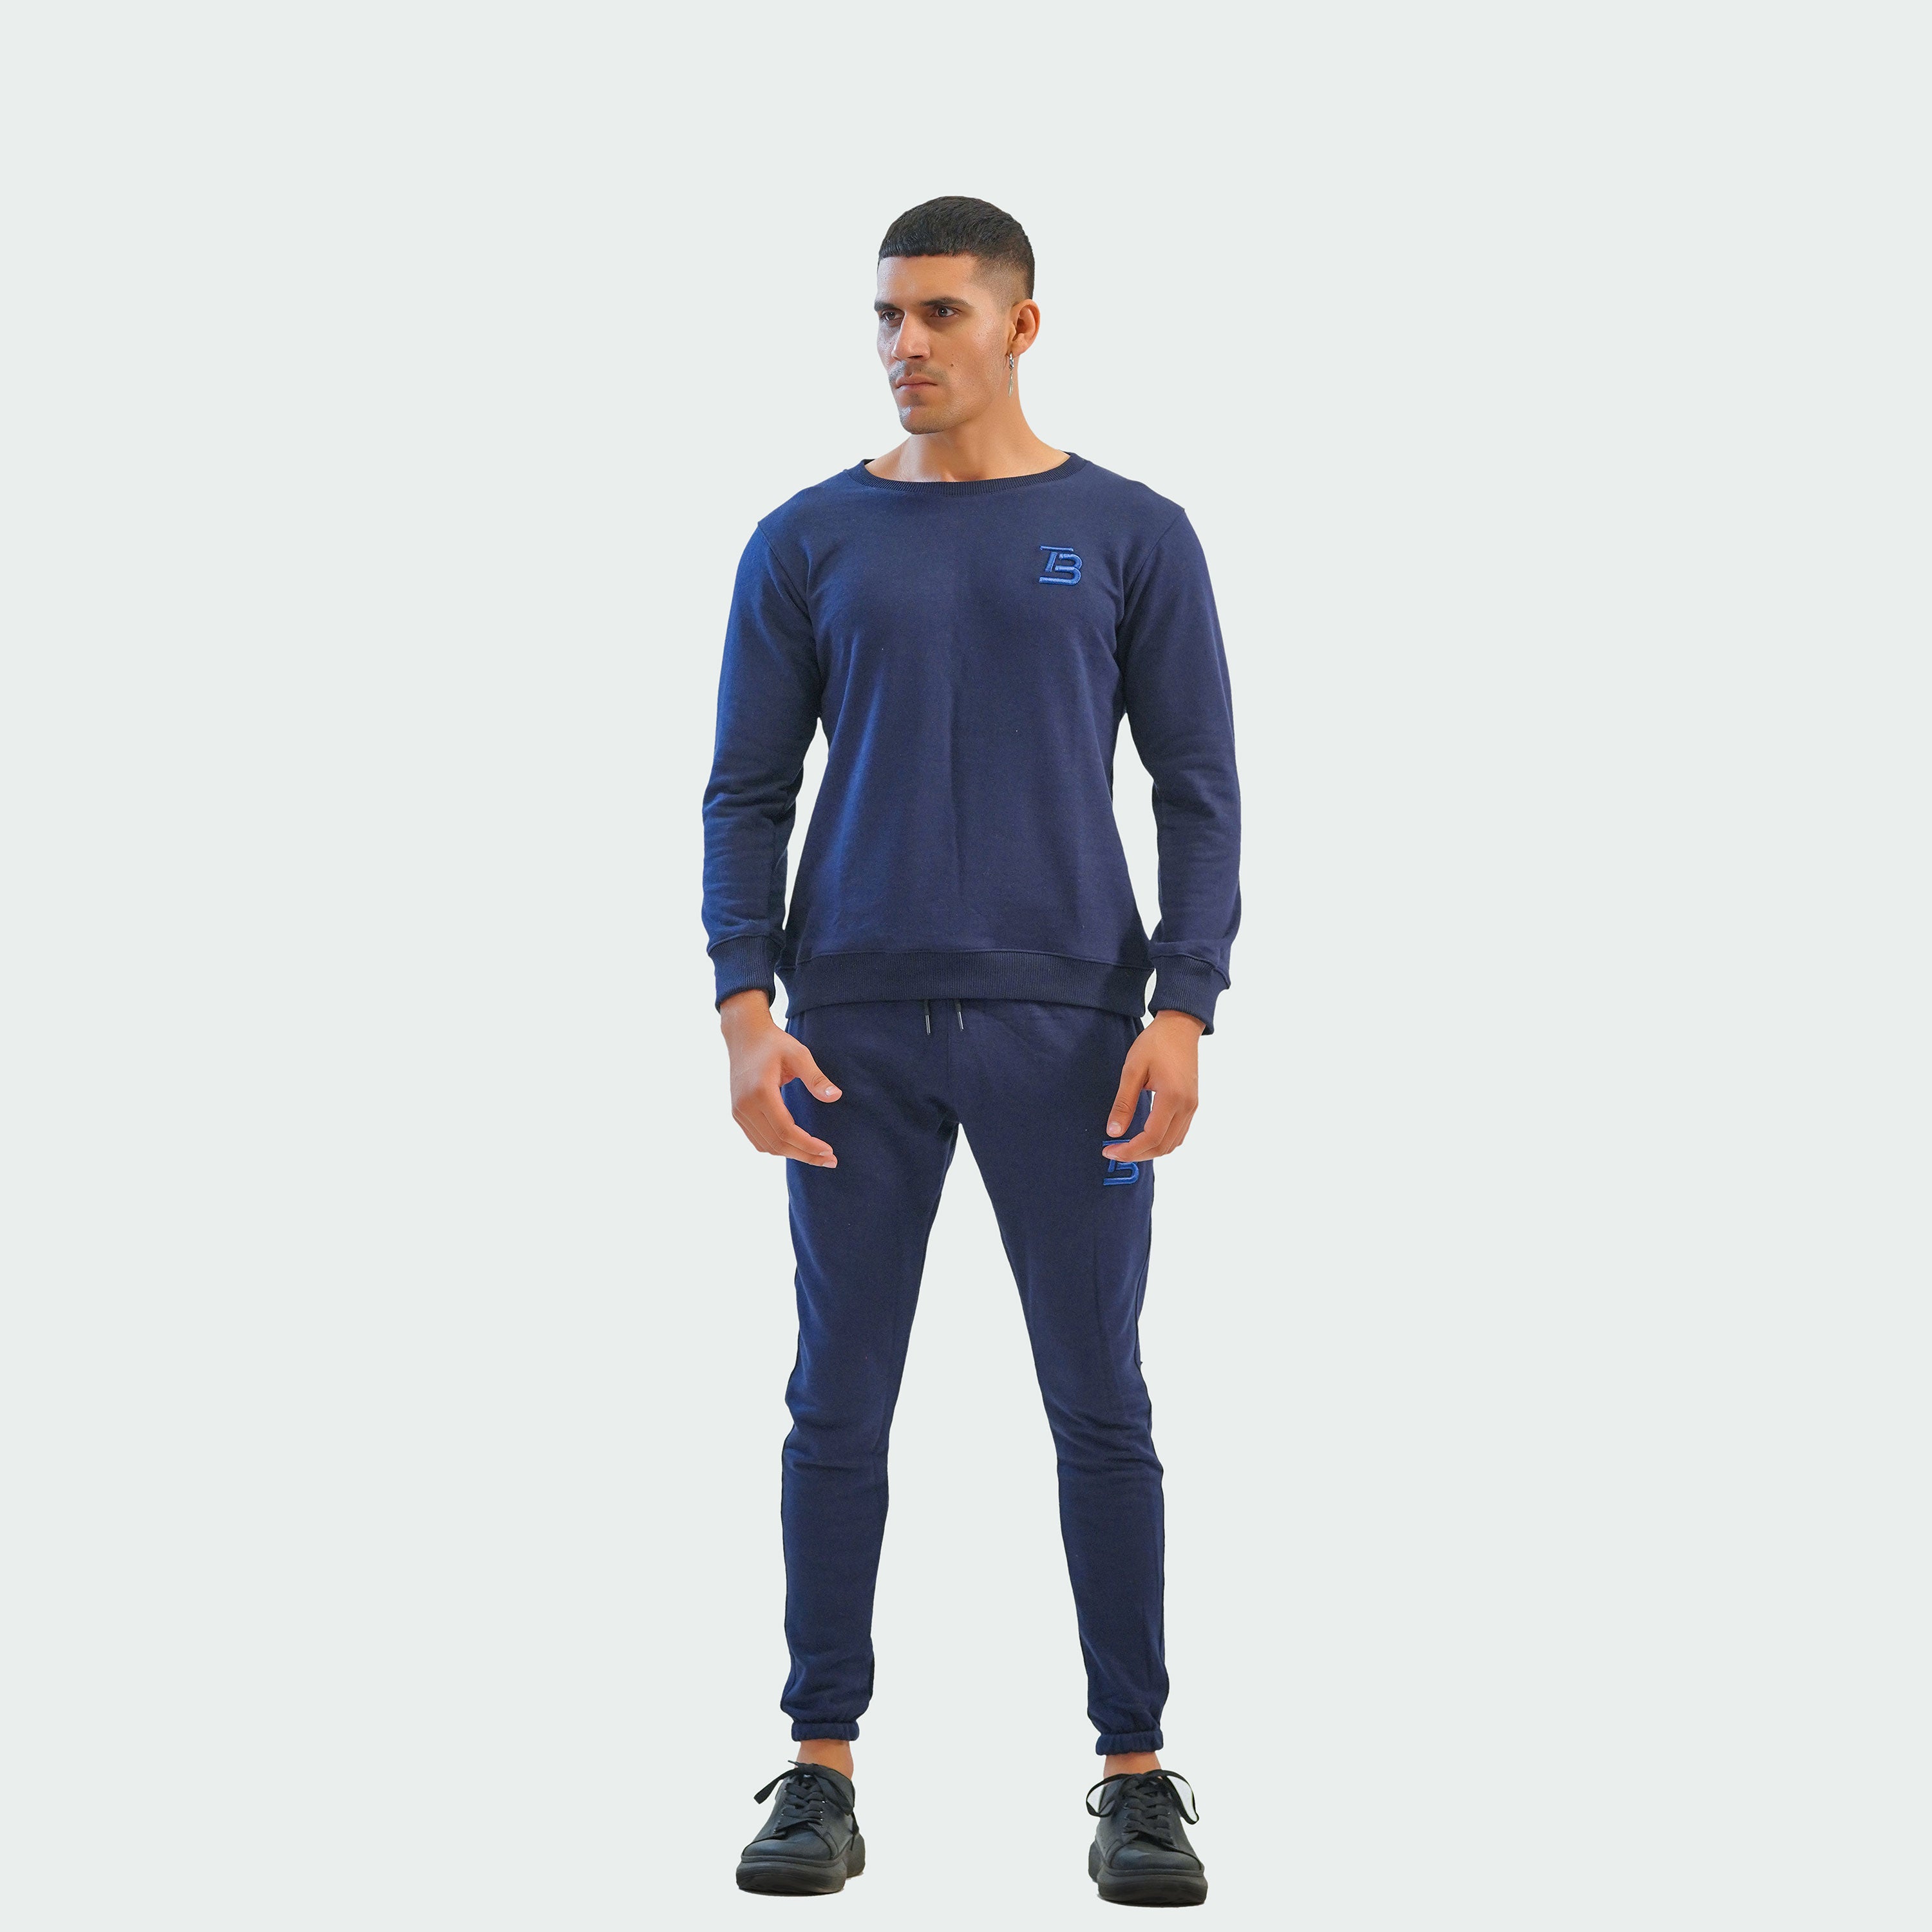 Unisex Athletic Wear- Navy